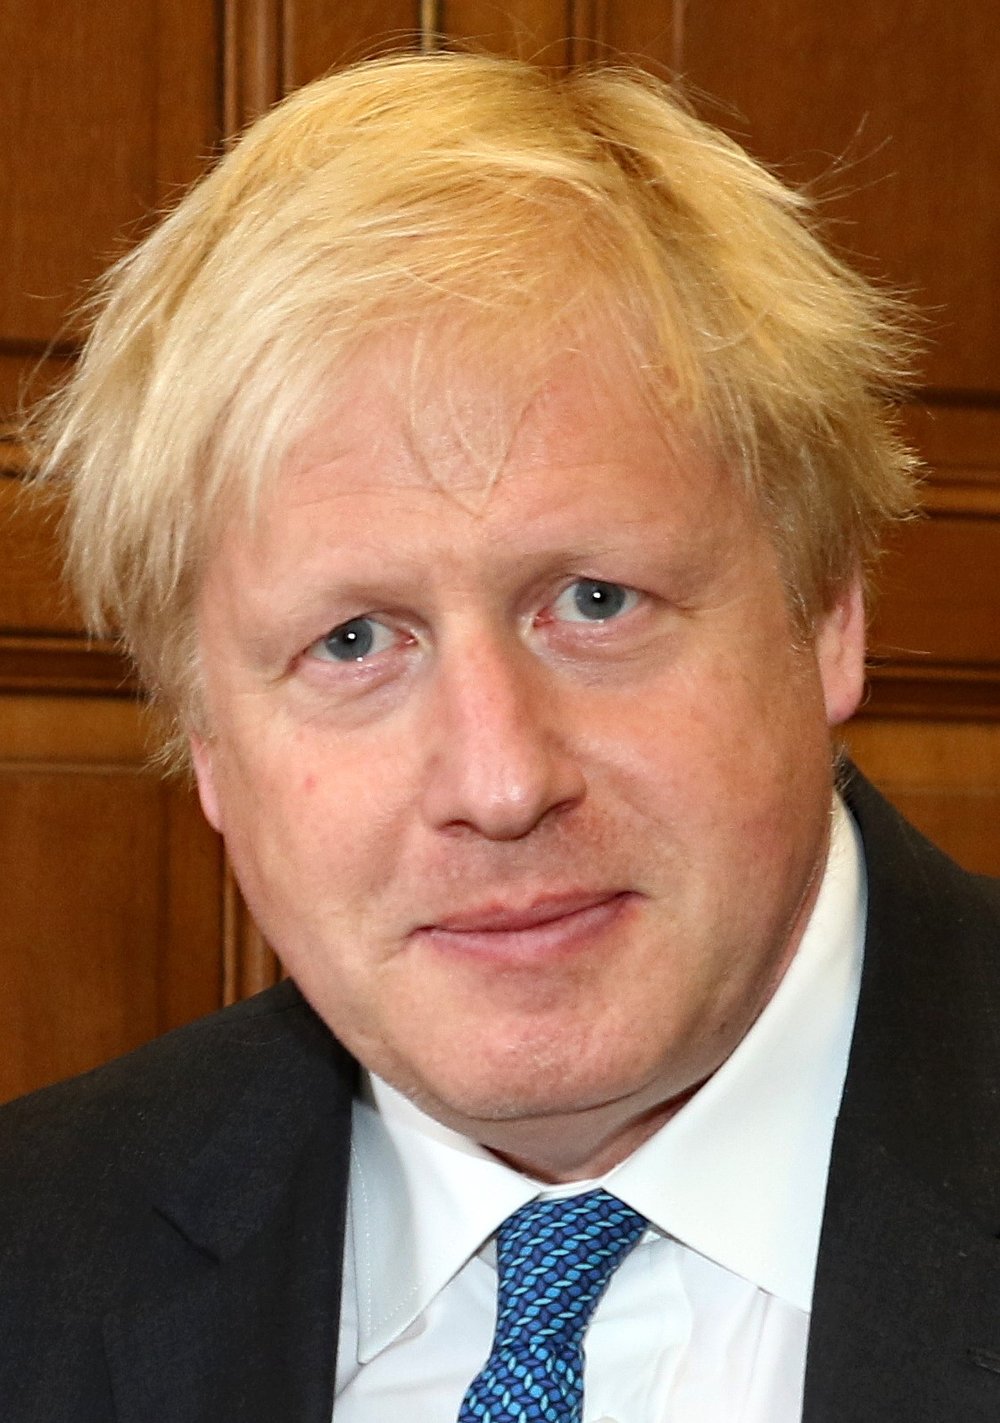 Boris_Johnson_in_2018_(cropped).jpeg